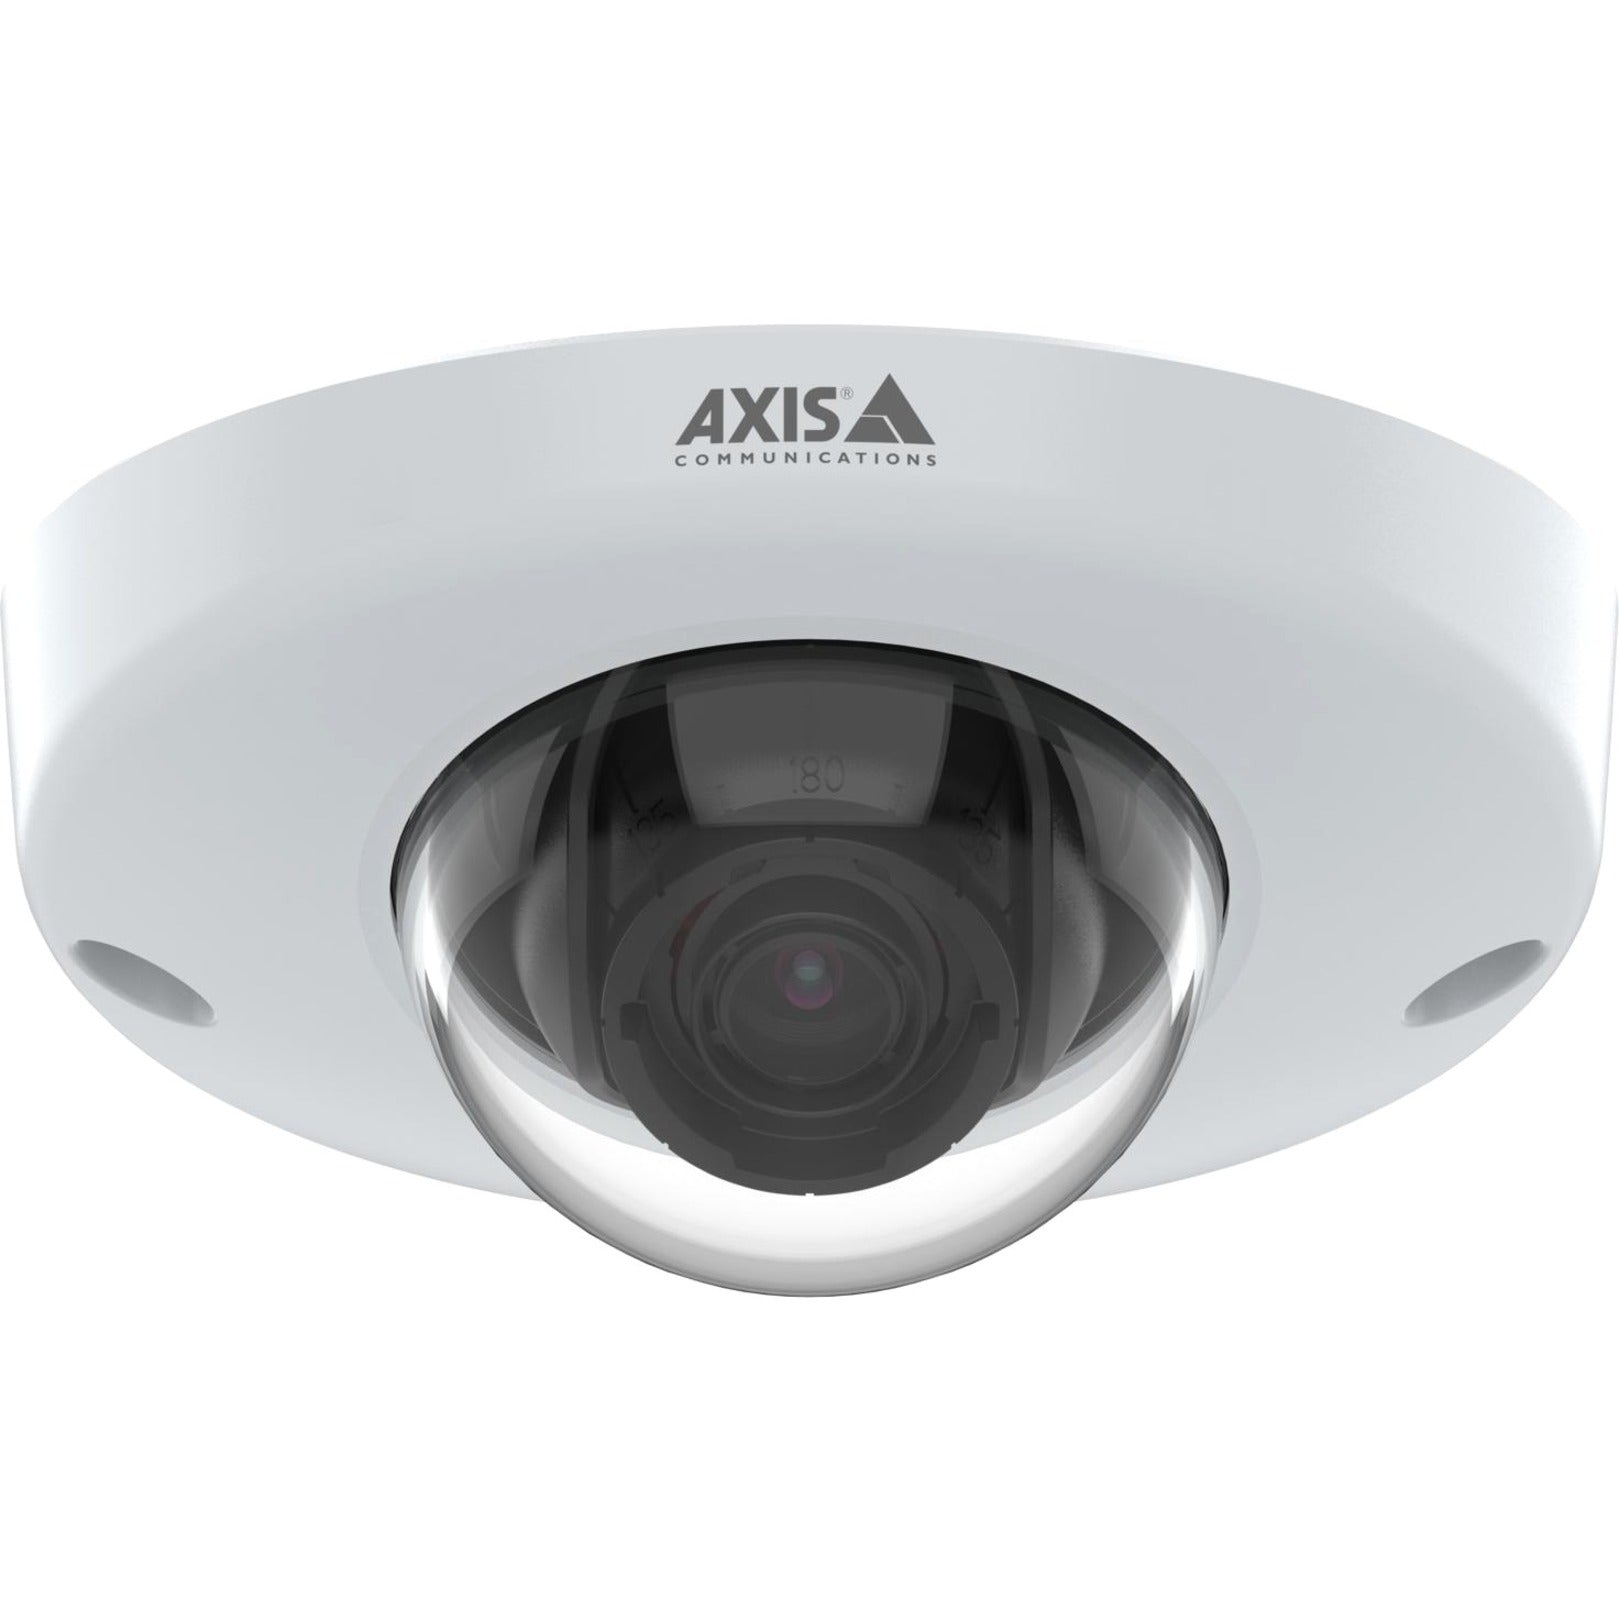 AXIS 02670-001 P3905-R Mk III Dome Camera, Full HD, Wide Dynamic Range, IP66/IP67